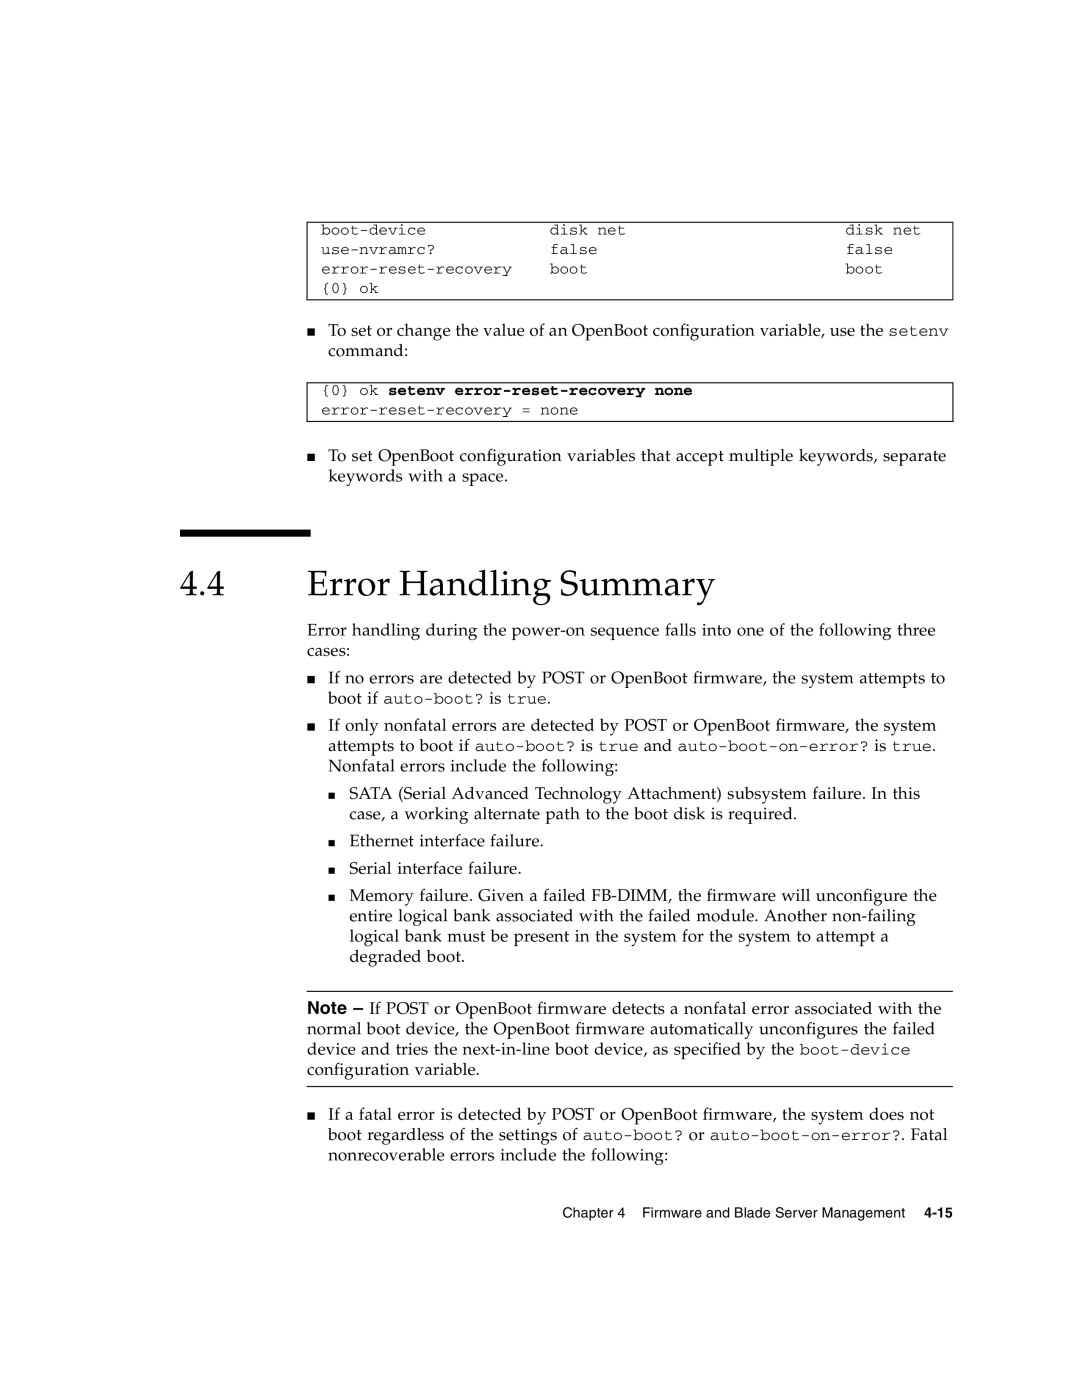 Sun Microsystems CP3260 manual Error Handling Summary 